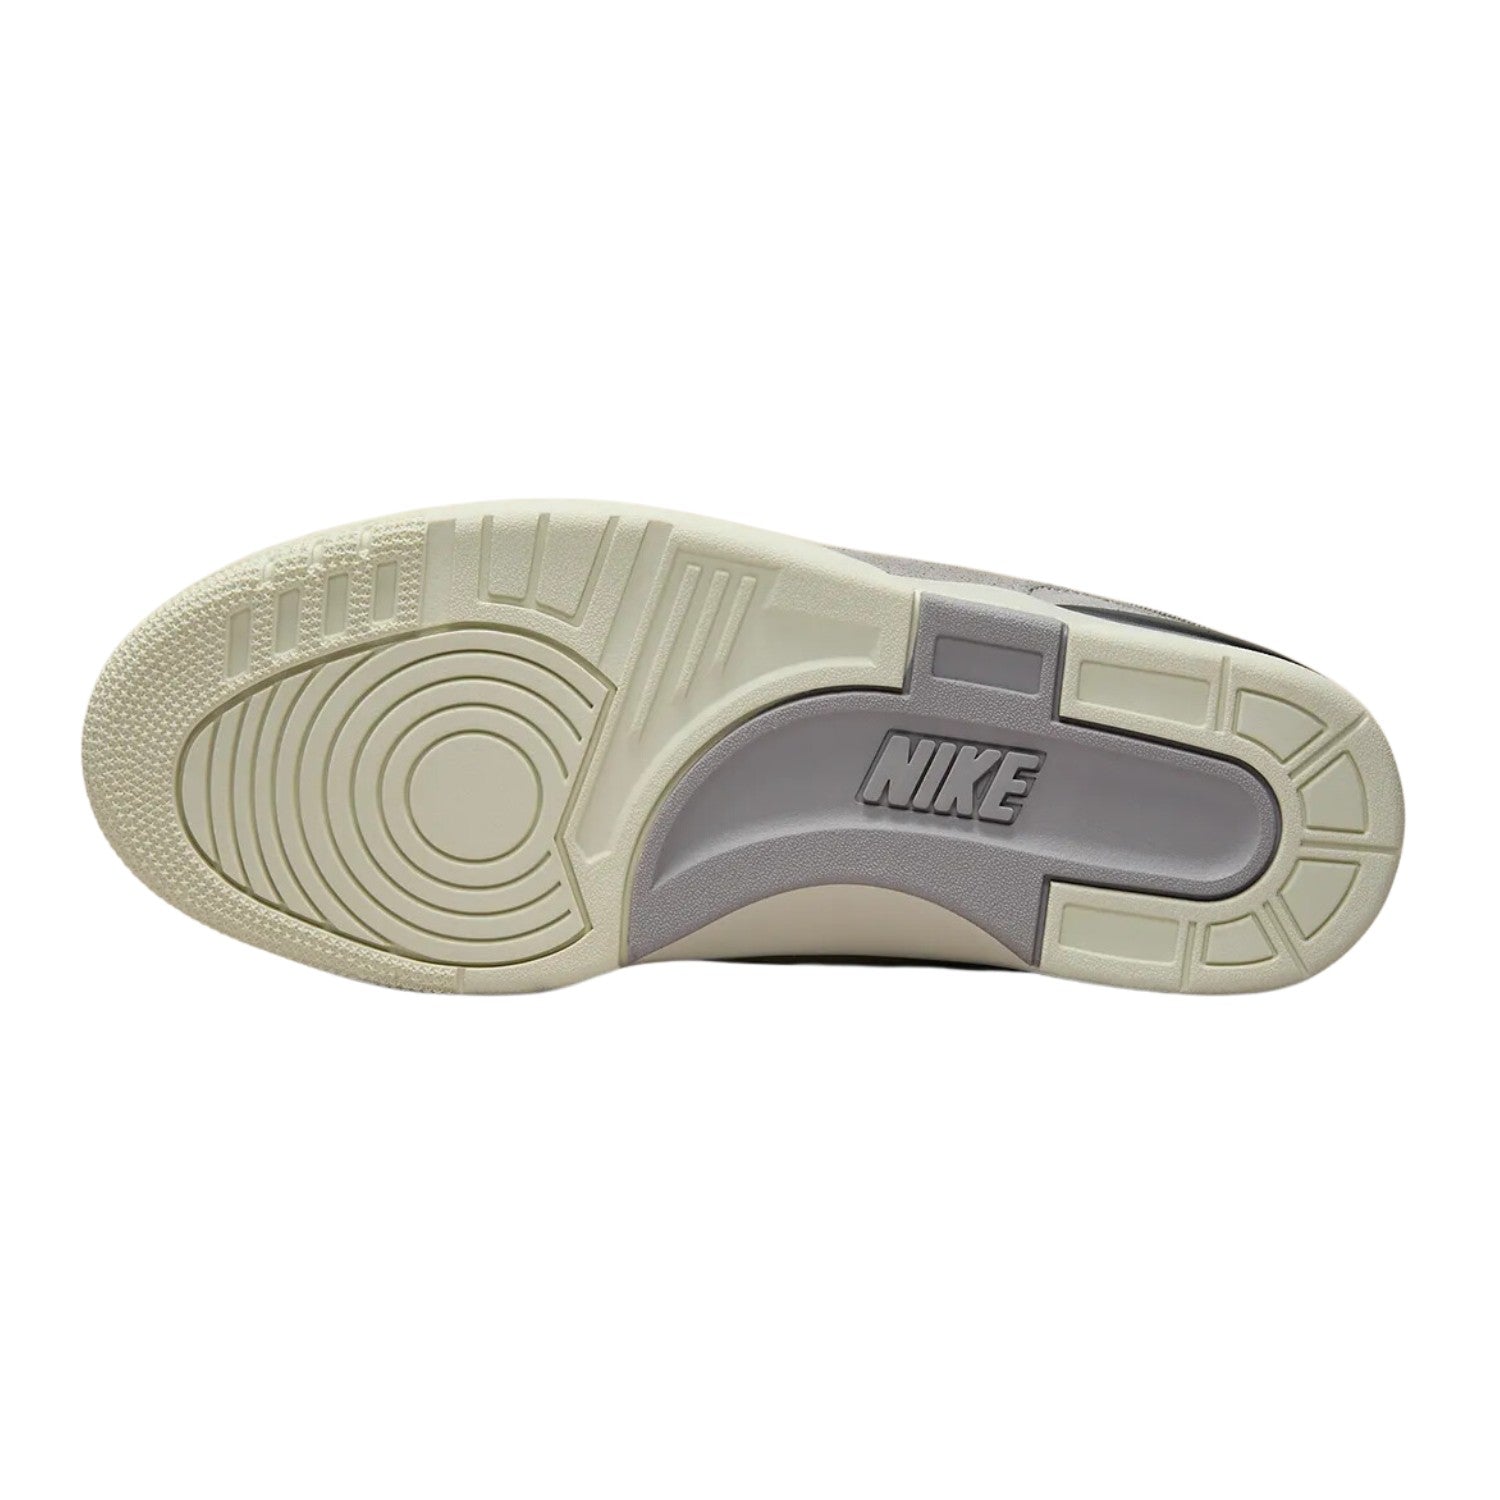 Nike Aaf88 Low Mens Style : Fj4184